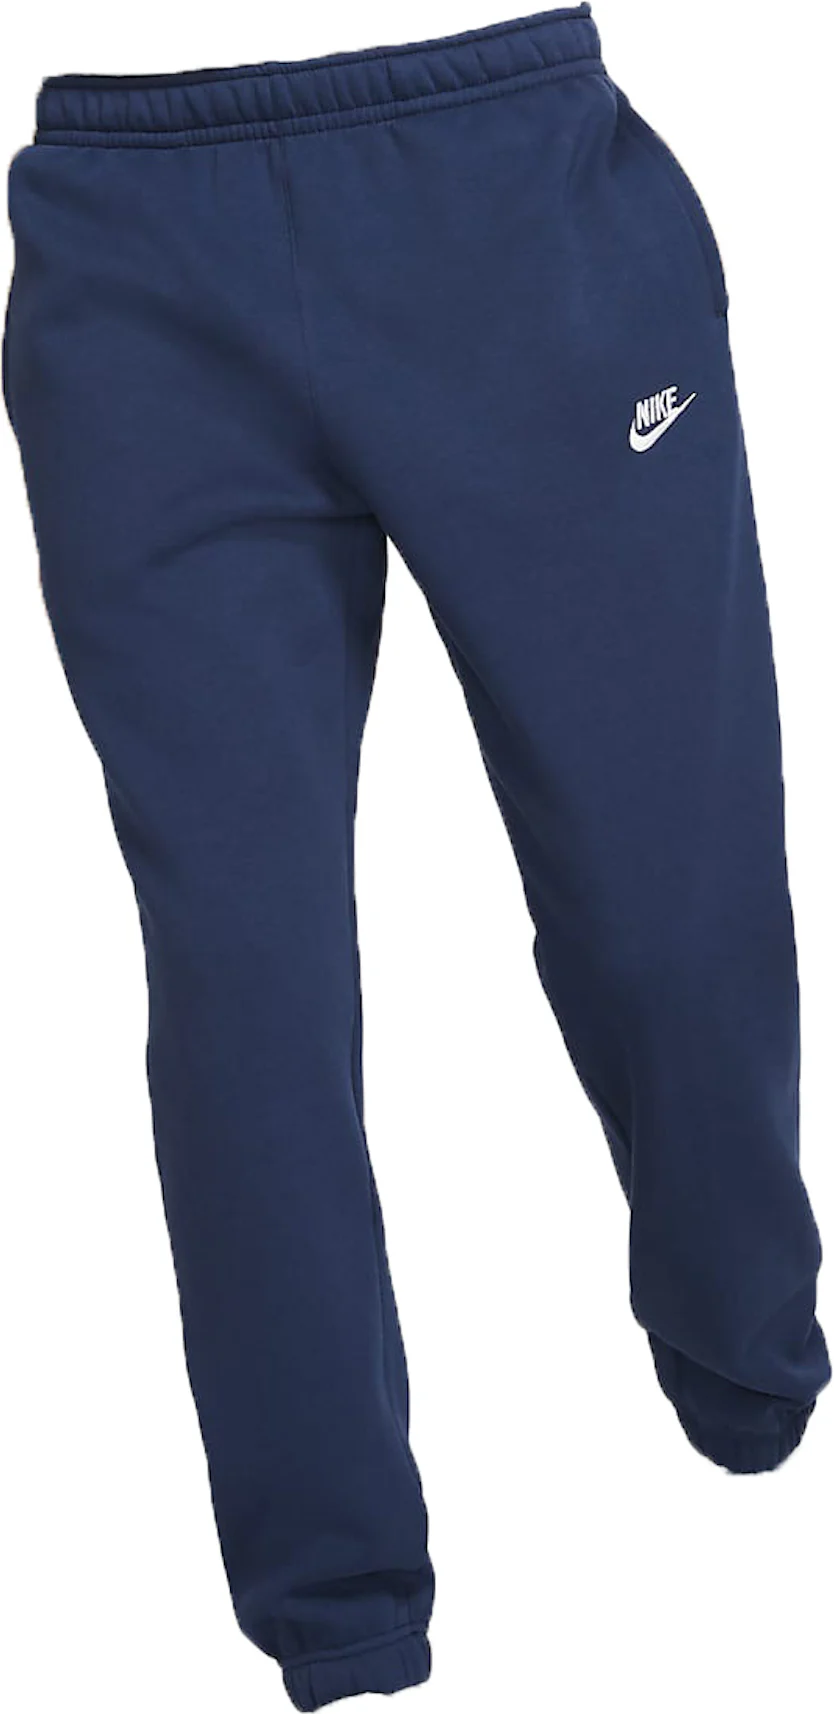 Nike Womens Club Fleece Jogger Sweatpants (Dark Grey/White, Medium)